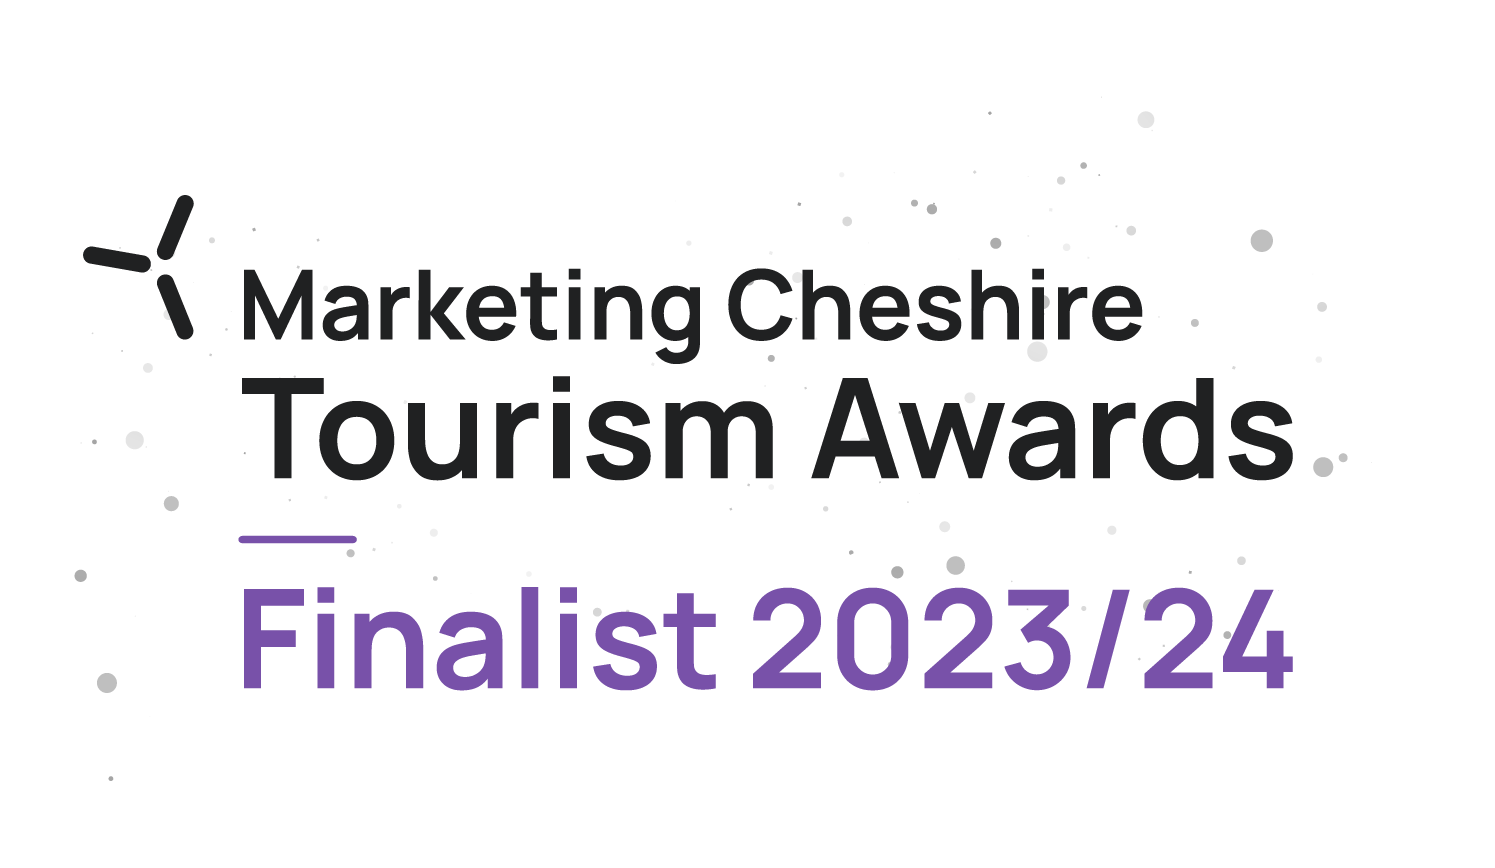 Marketing Cheshire Tourism Awards finalist 2023/24 logo